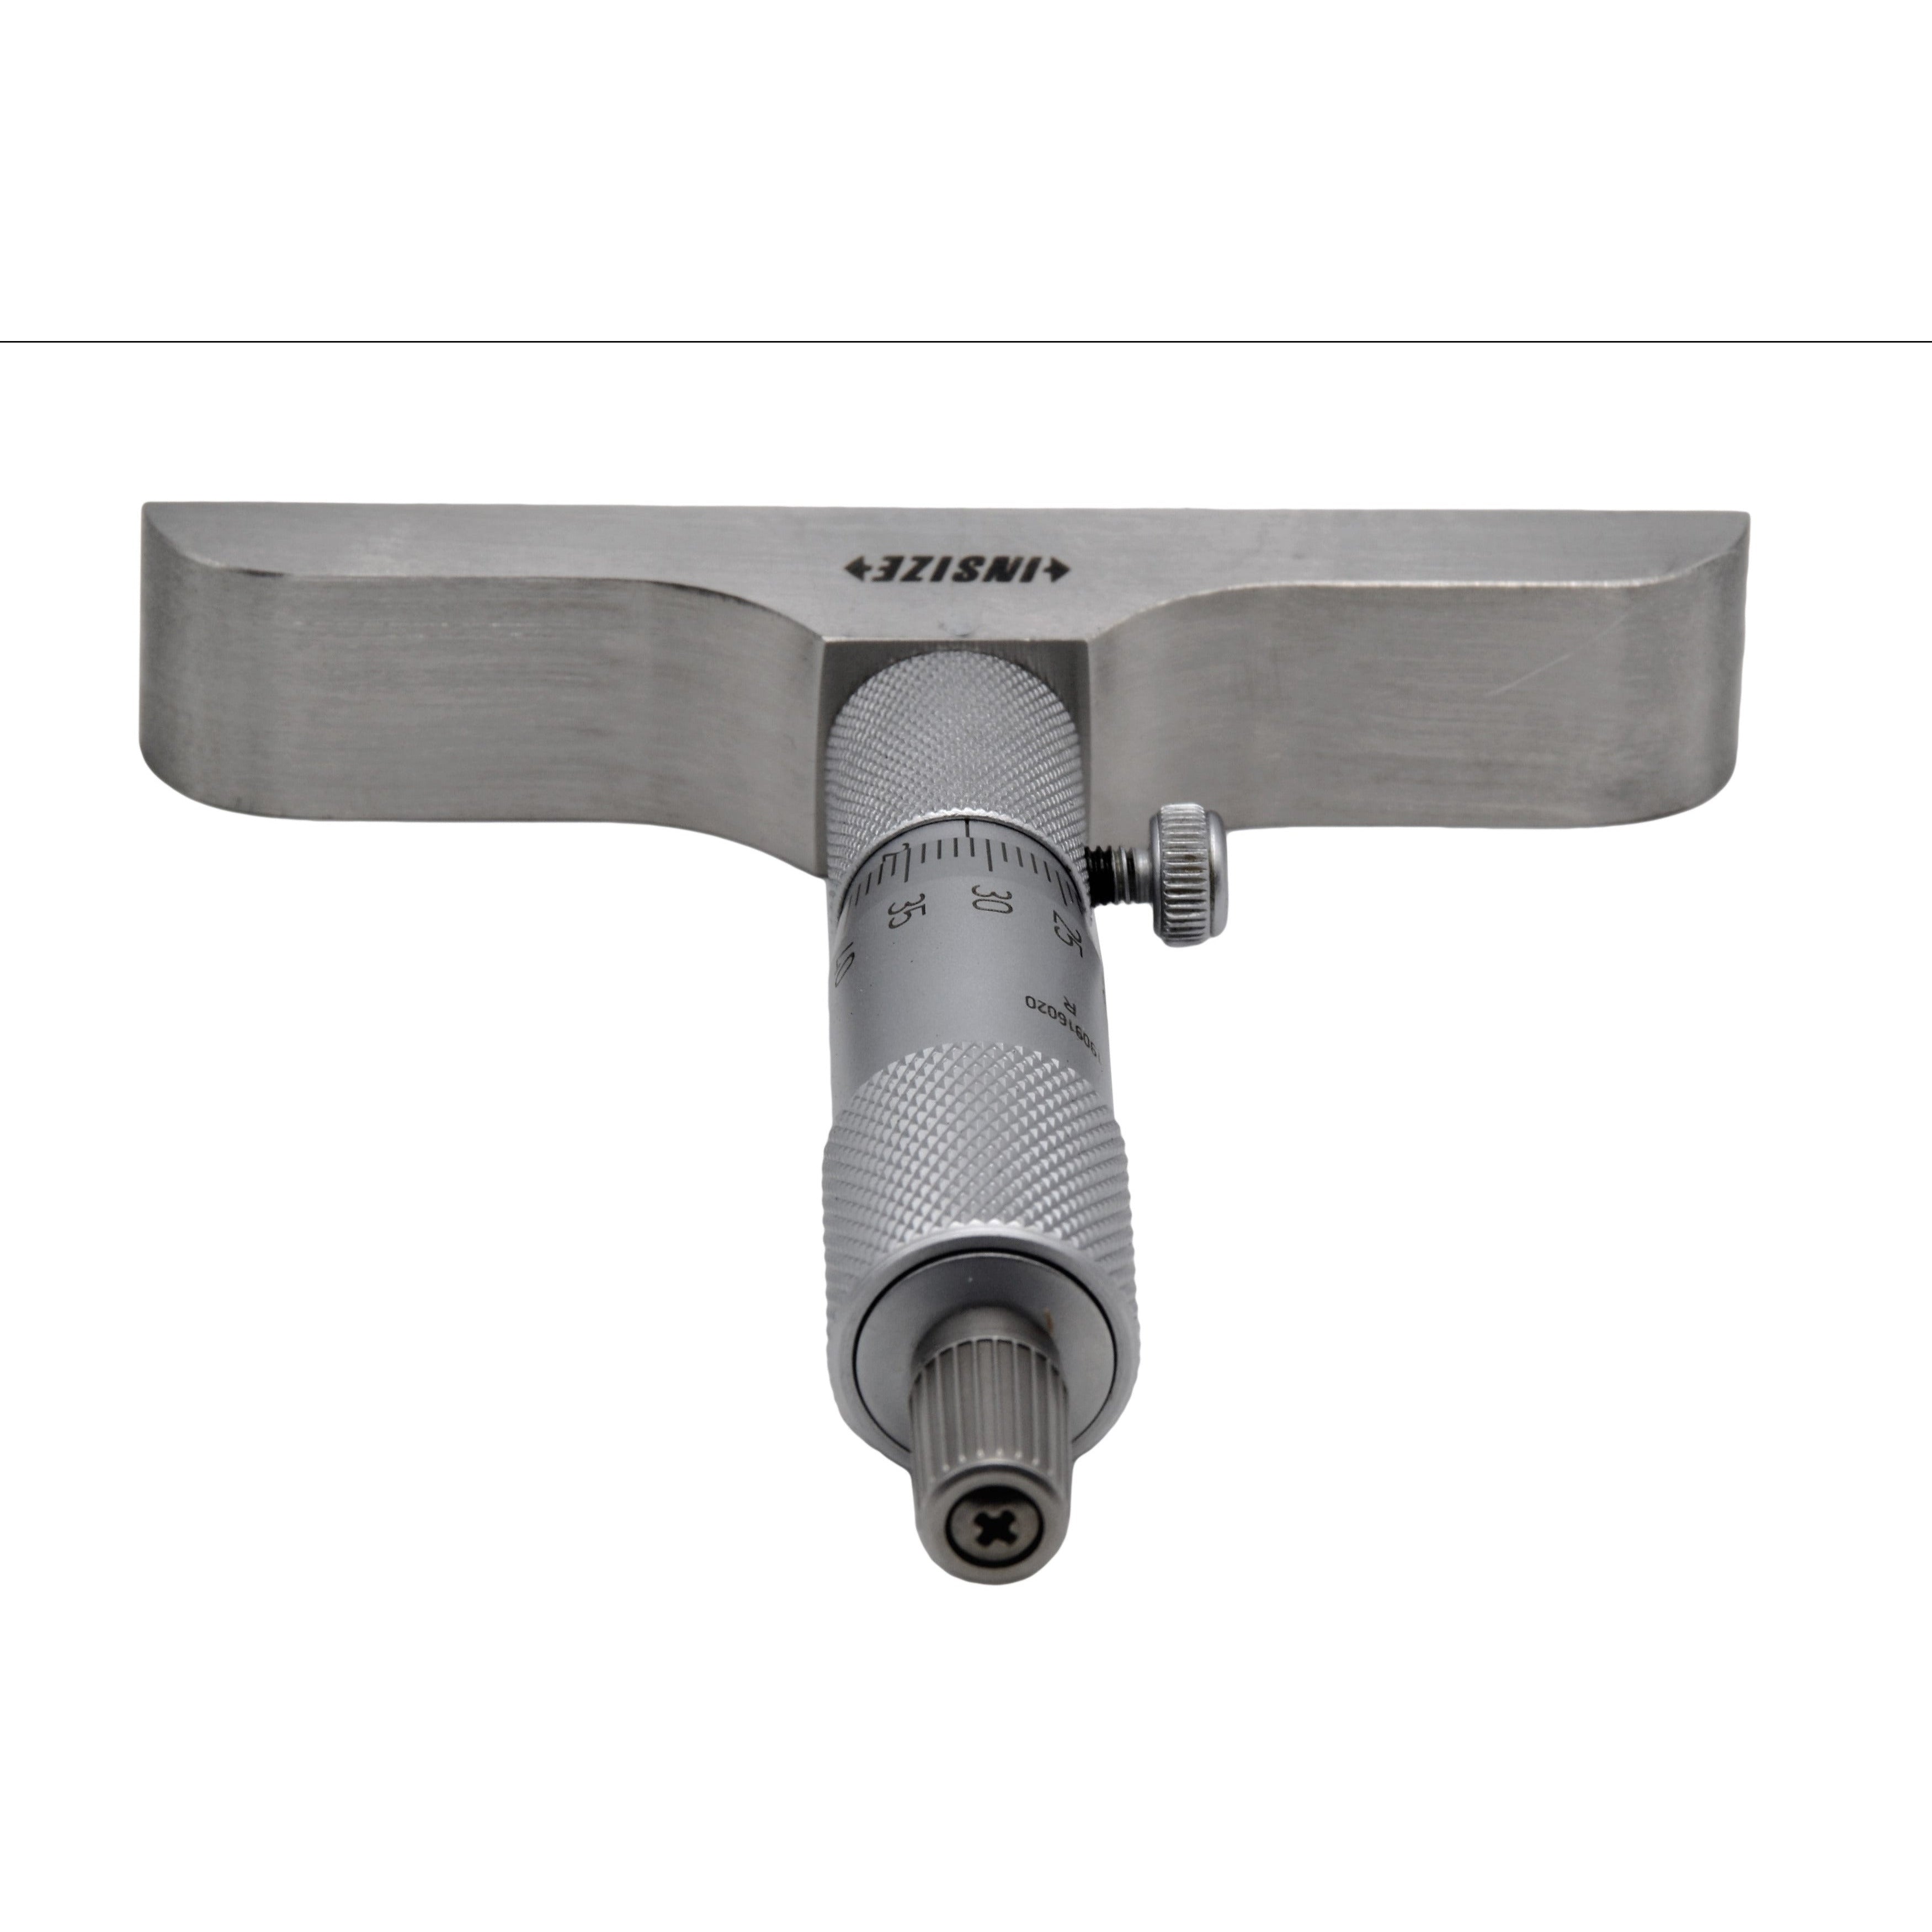 Insize Metric Depth Micrometer 0-25MM Range Series 3240-25